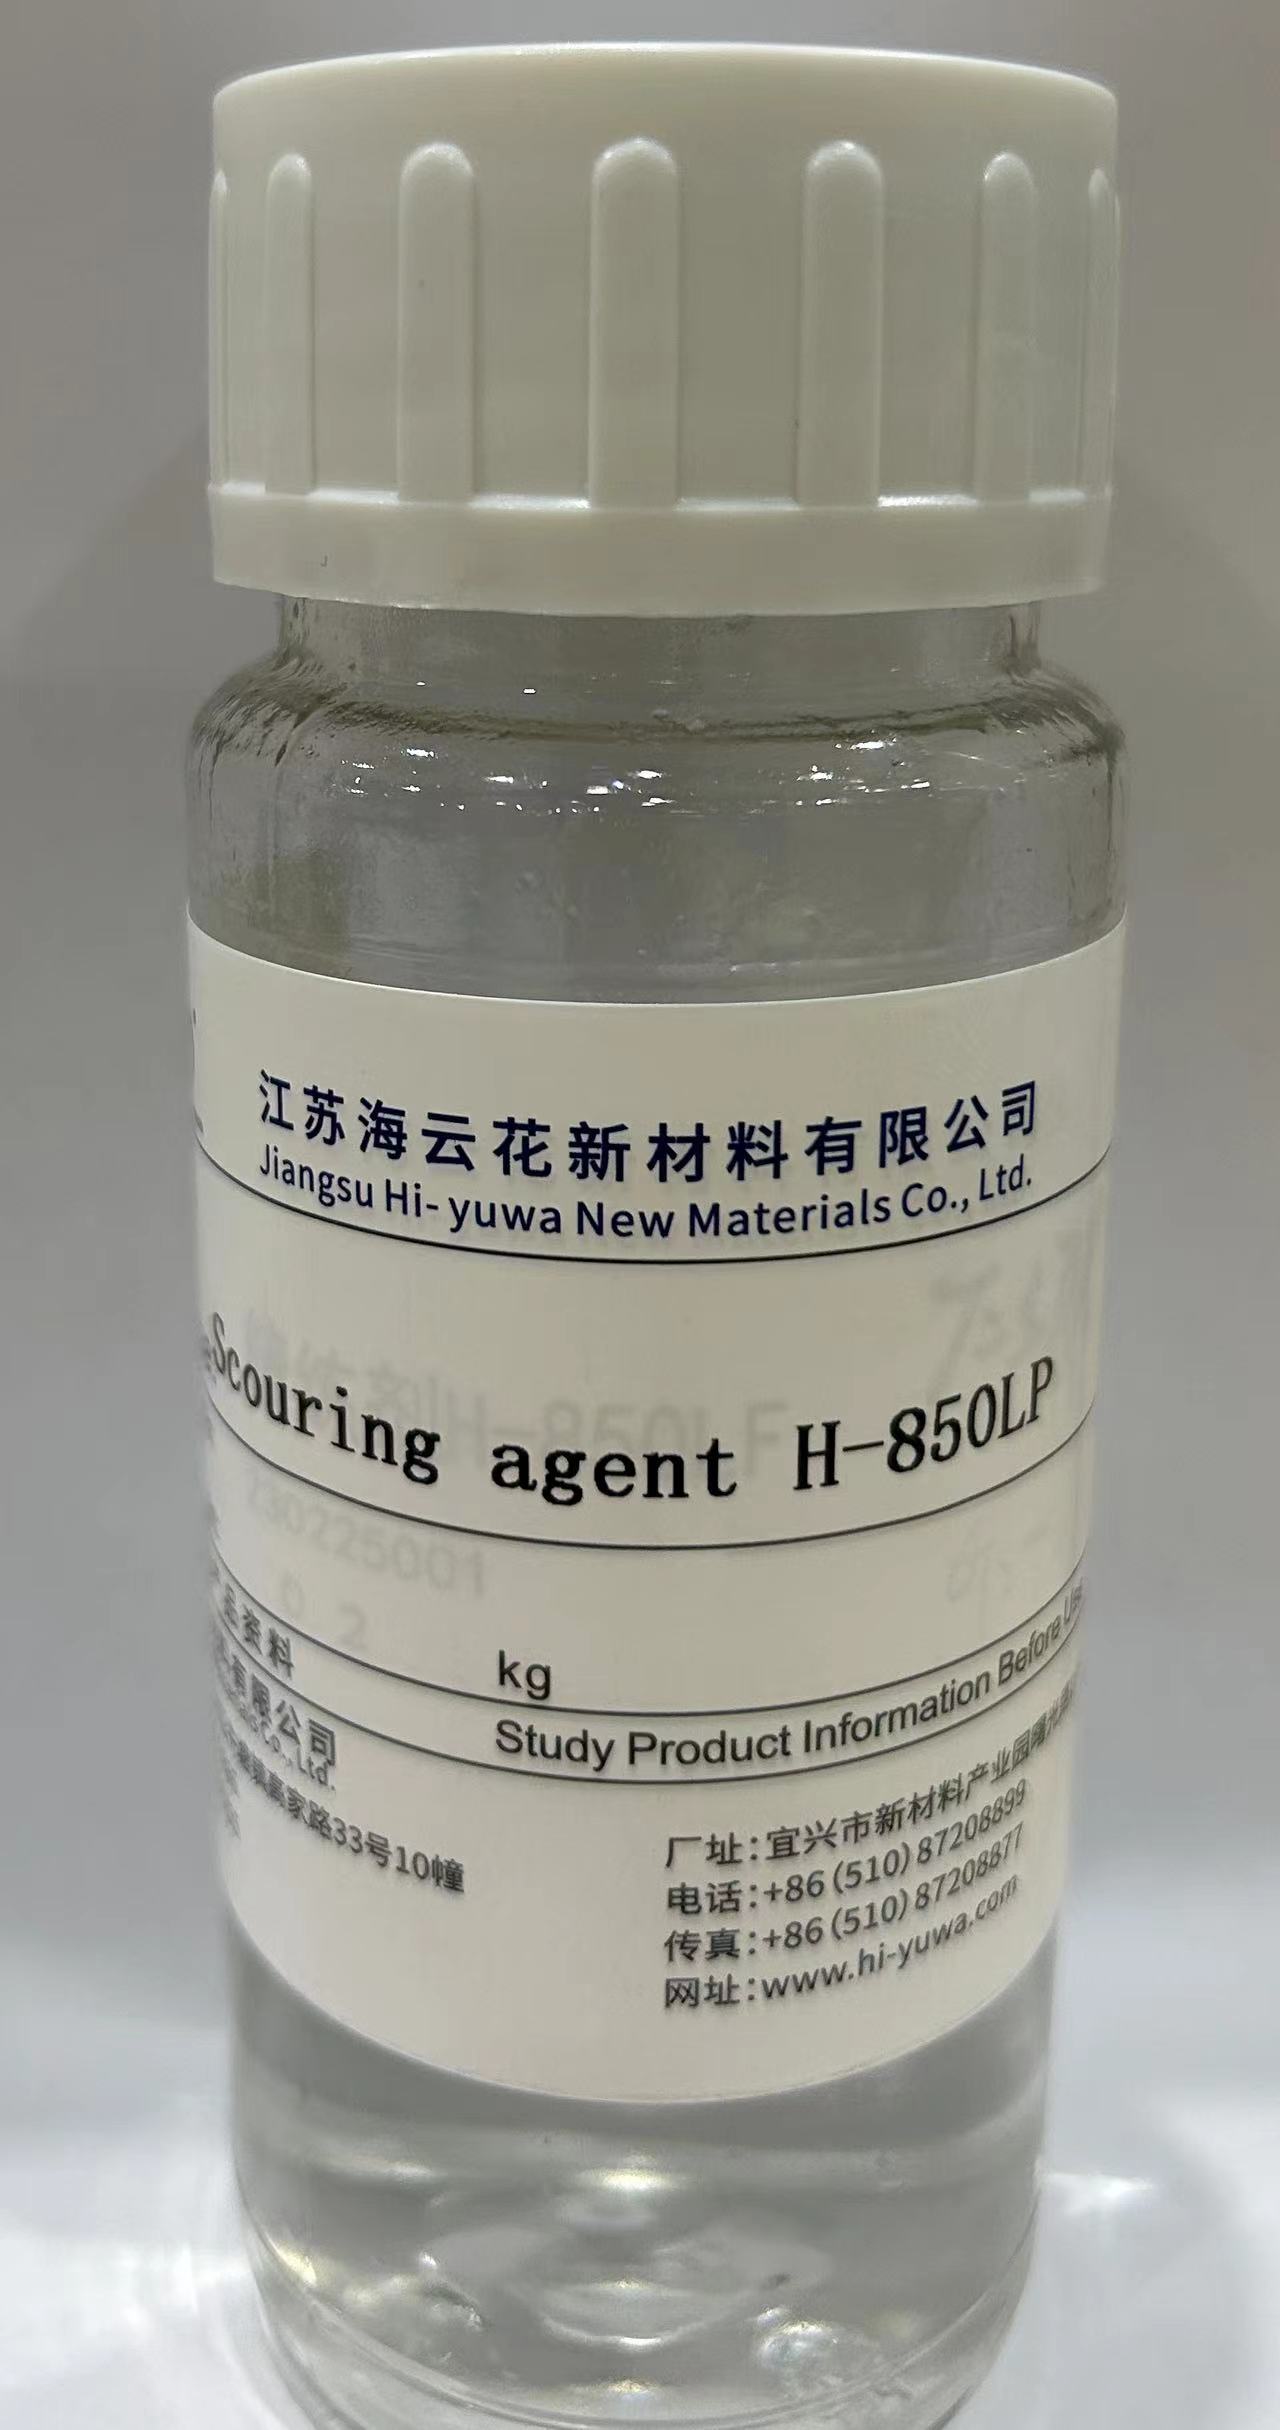 Scouring agent H-850LP